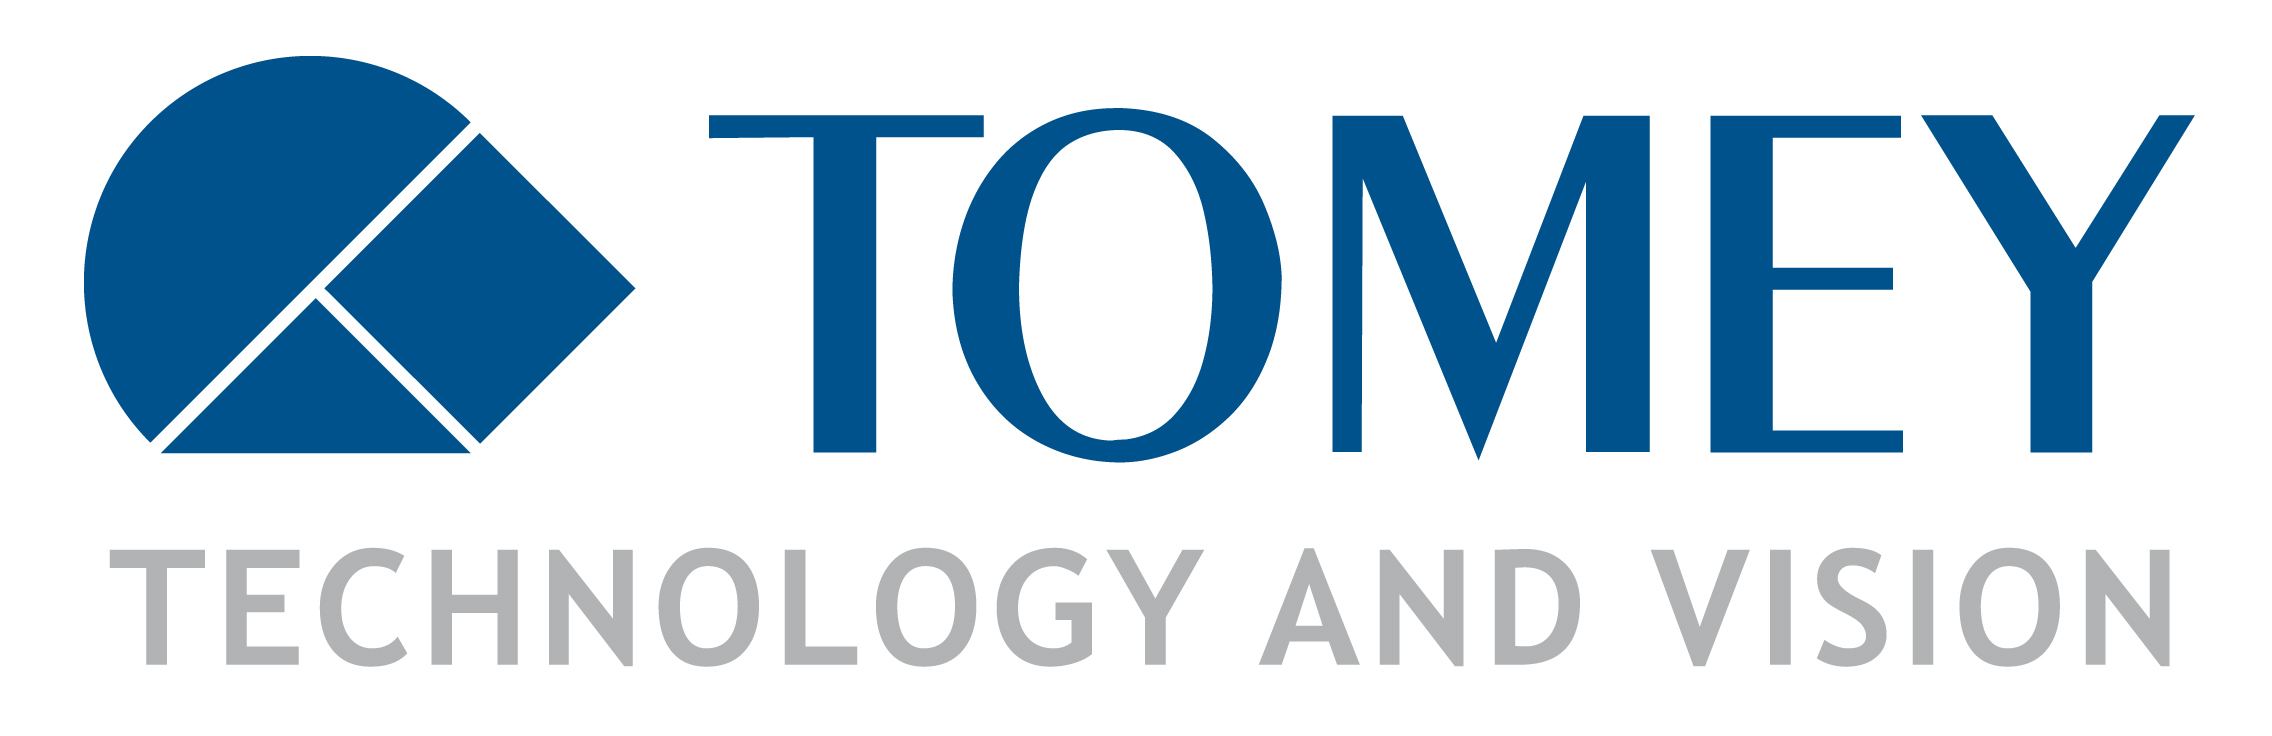 Tomey Logo